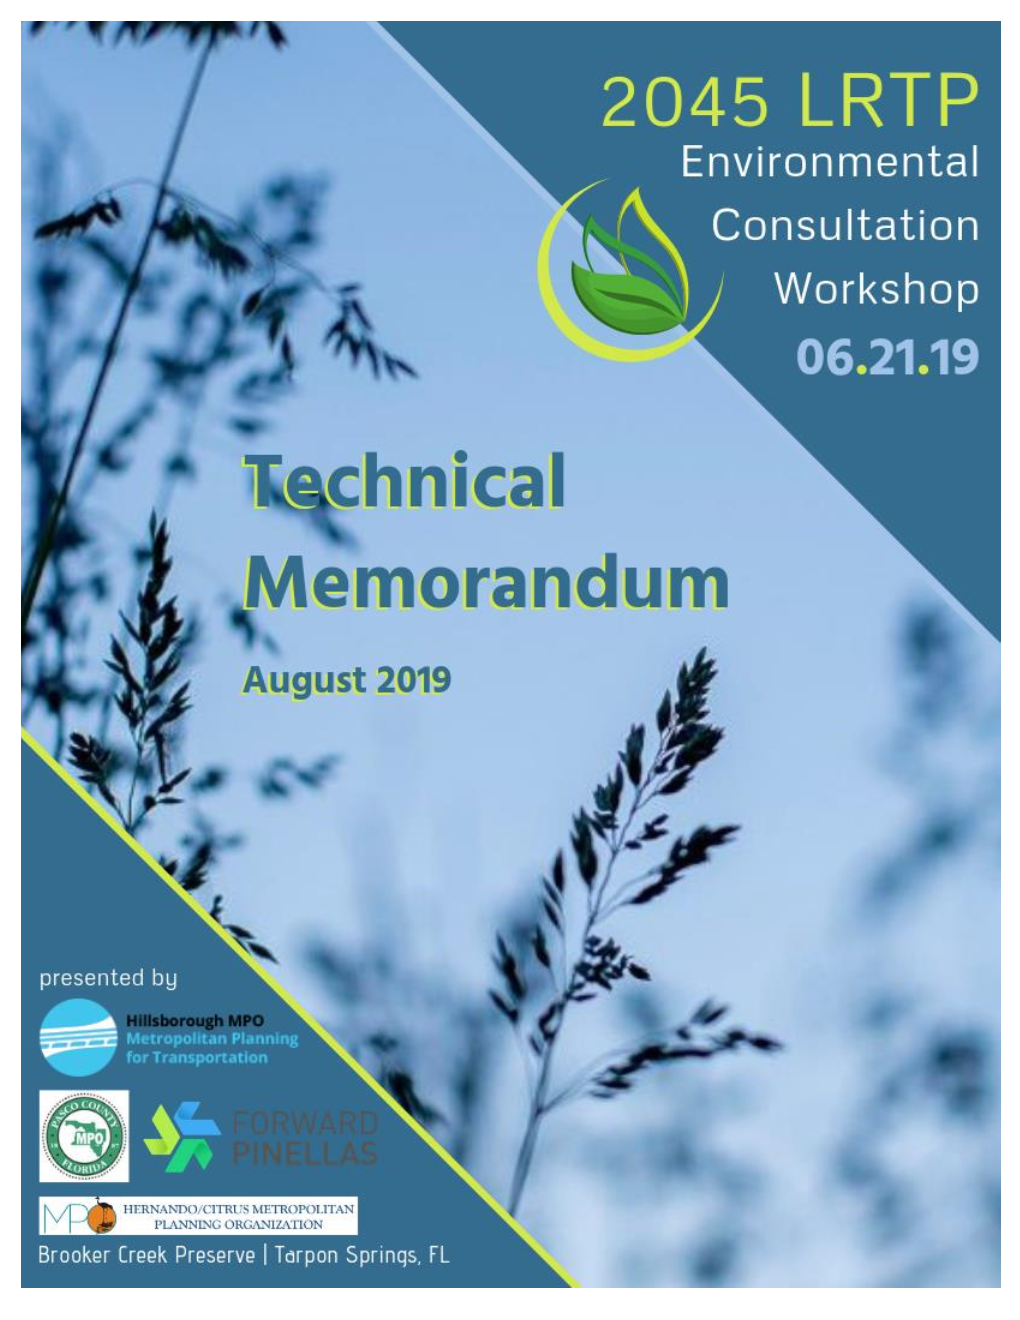 To View the Workshop's Technical Memorandum